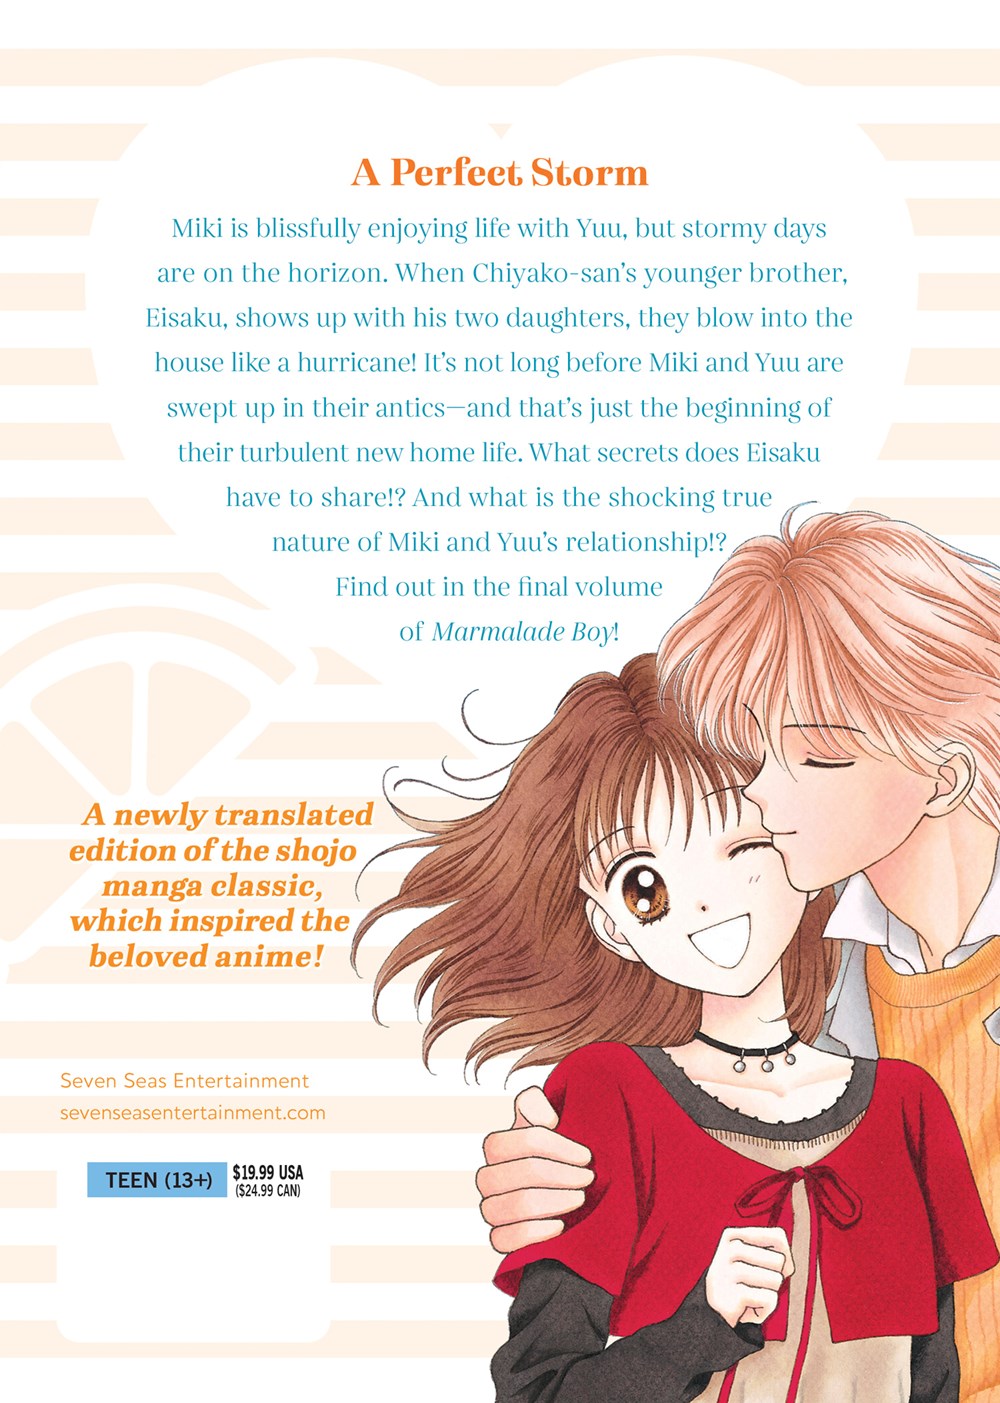 Marmalade Boy: Collector's Edition Manga Volume 5